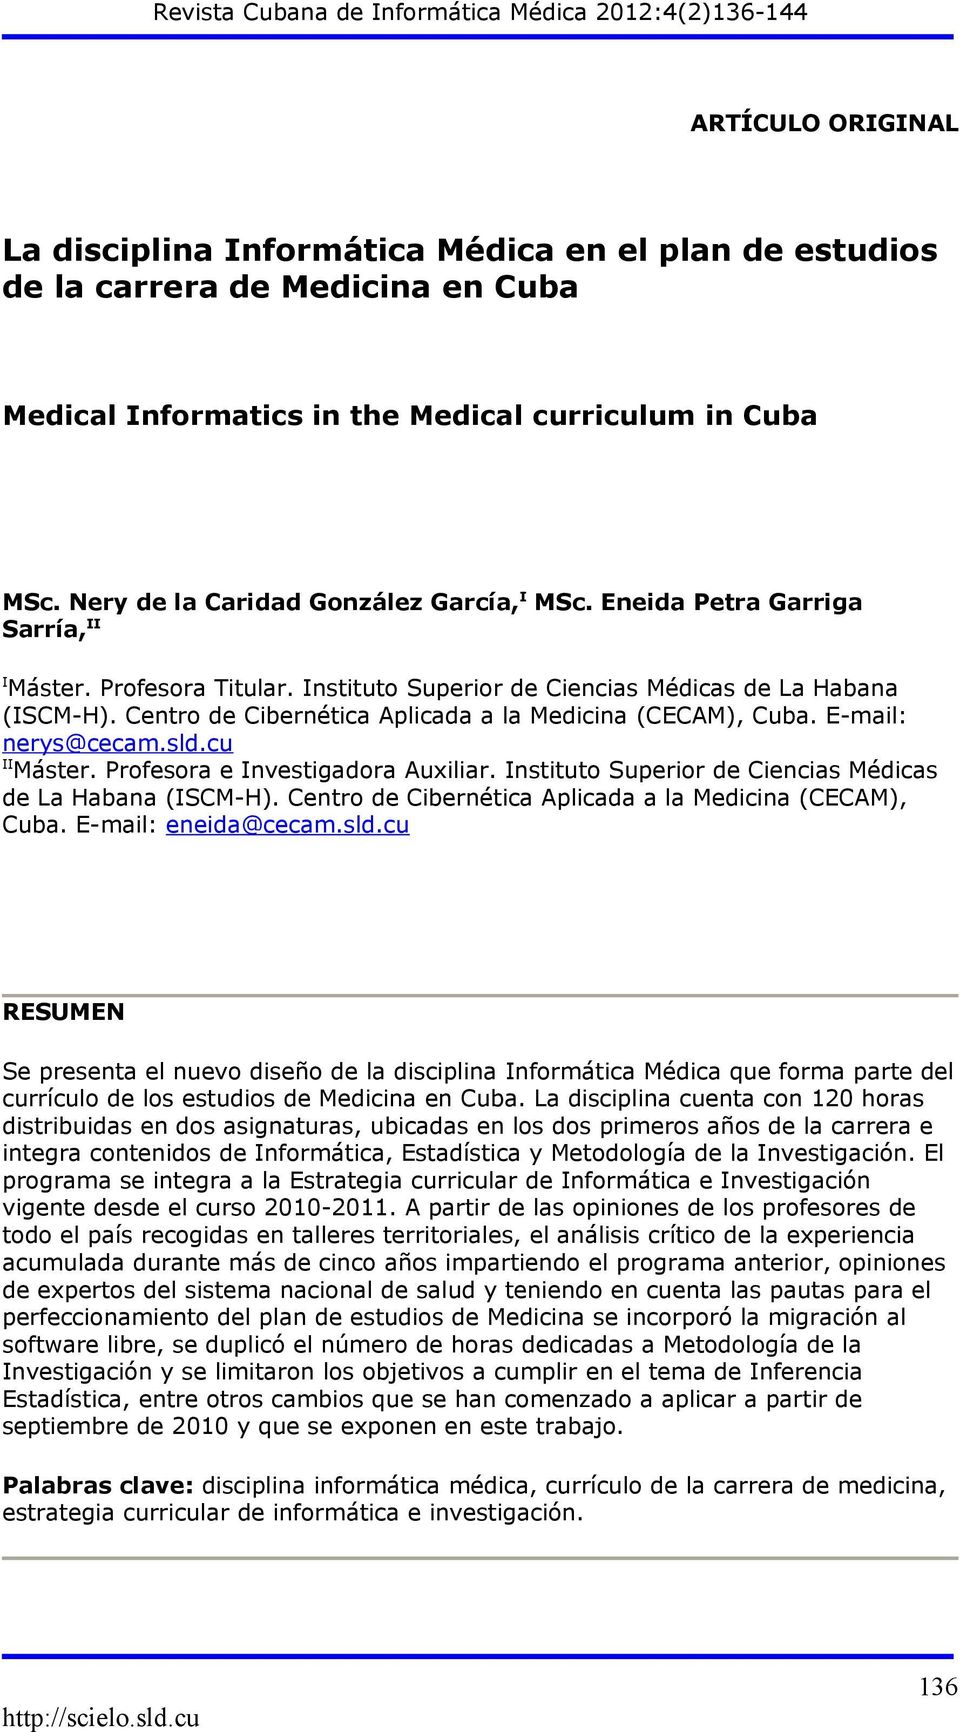 Centro de Cibernética Aplicada a la Medicina (CECAM), Cuba. E-mail: nerys@cecam.sld.cu II Máster. Profesora e Investigadora Auxiliar. Instituto Superior de Ciencias Médicas de La Habana (ISCM-H).